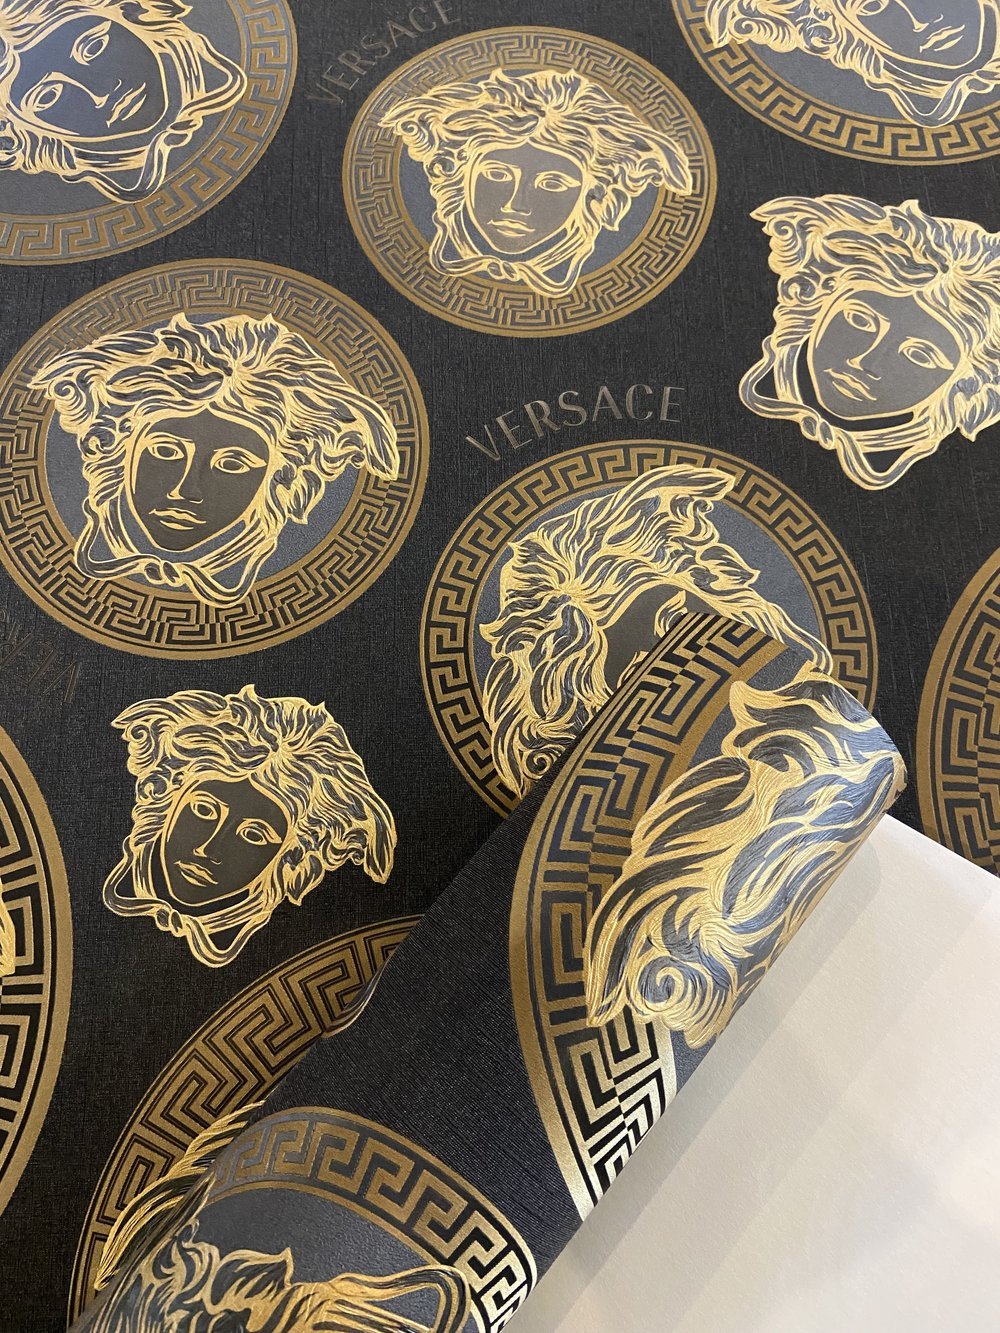 Versace Medusa Head Wallpaper, Black & Gold, 386117, Shop Wallpaper  Online, America's Best Wallpaper Selection